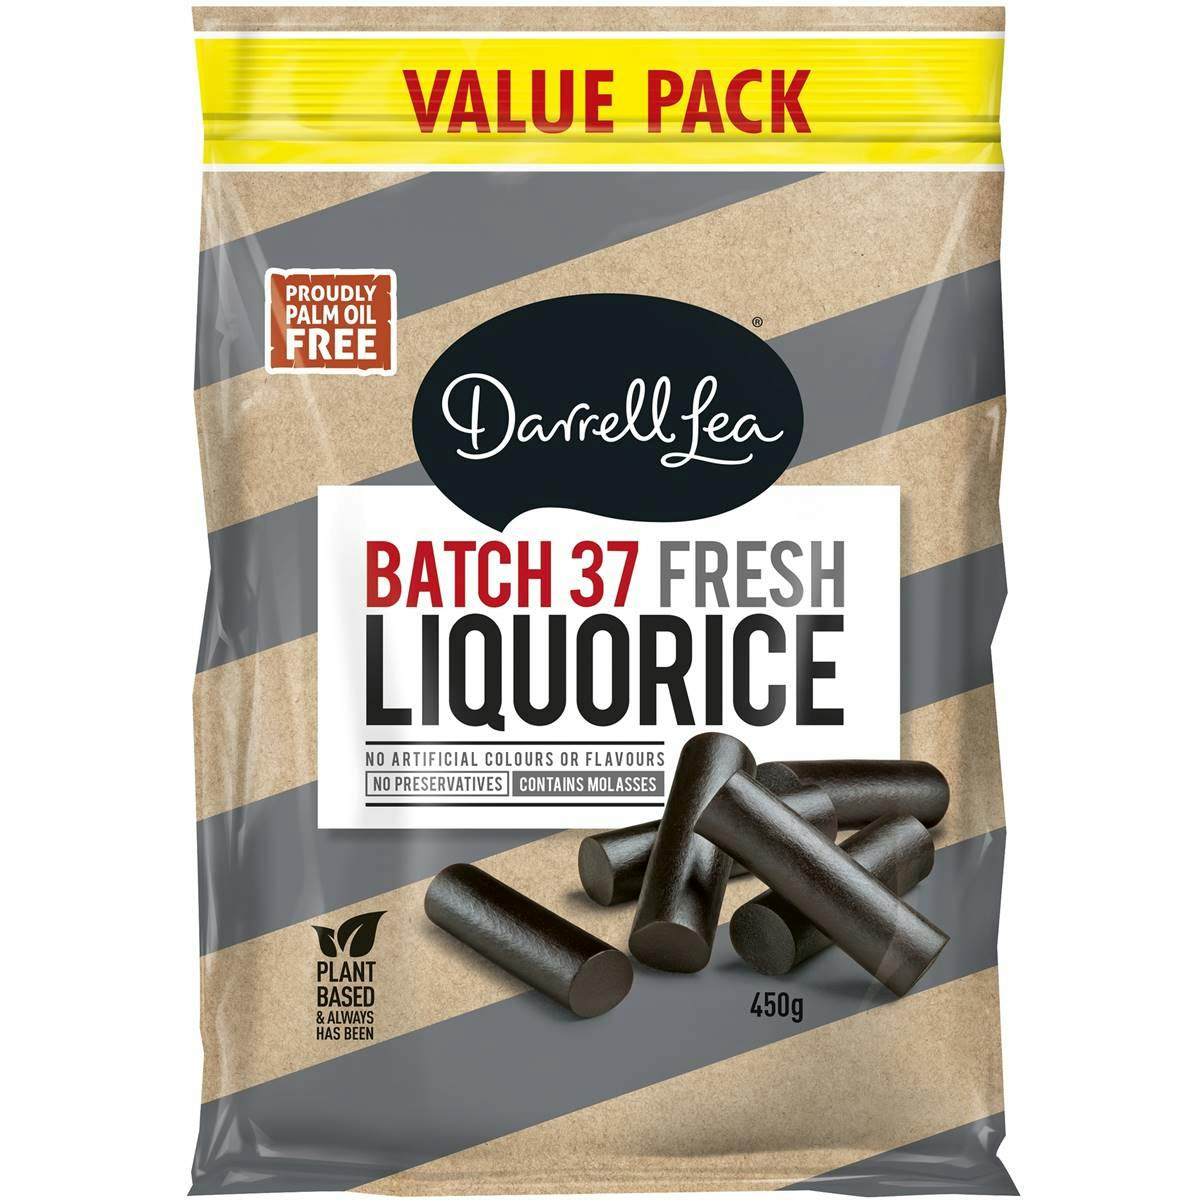 Darrell Lea Batch 37 Fresh Liquorice